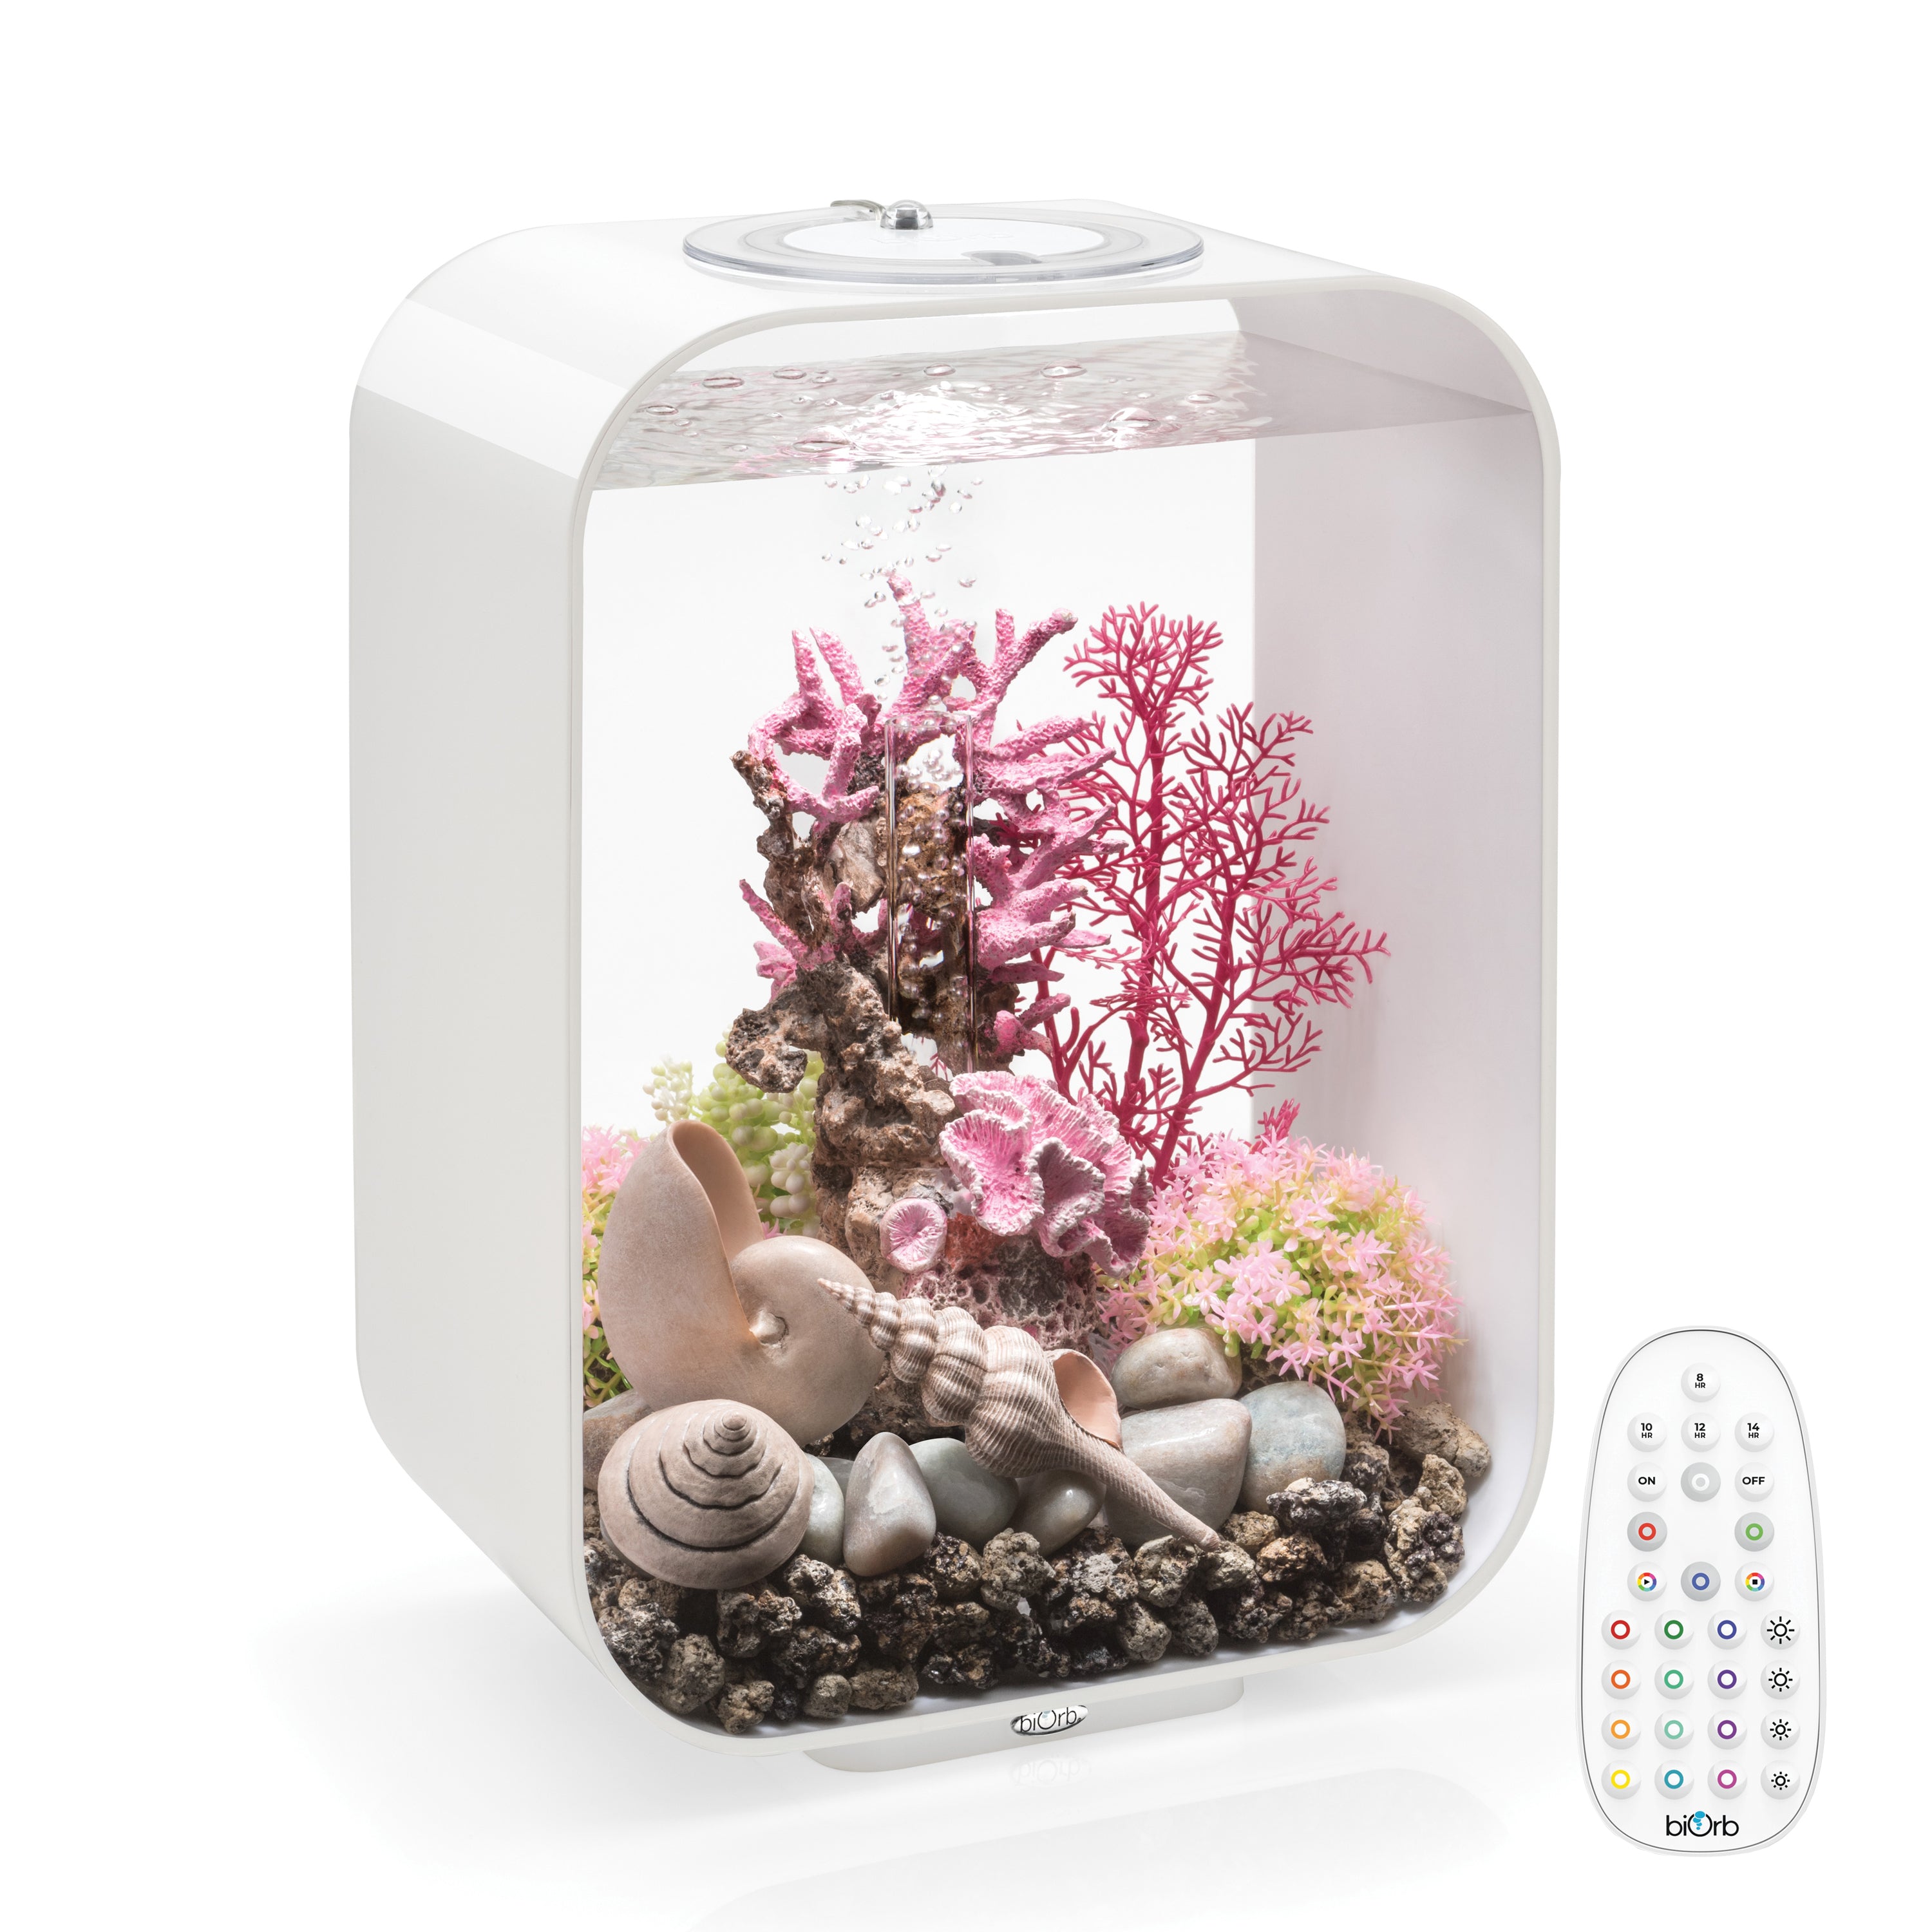 LIFE 15 Aquarium with MCR Light - 4 gallon available in white